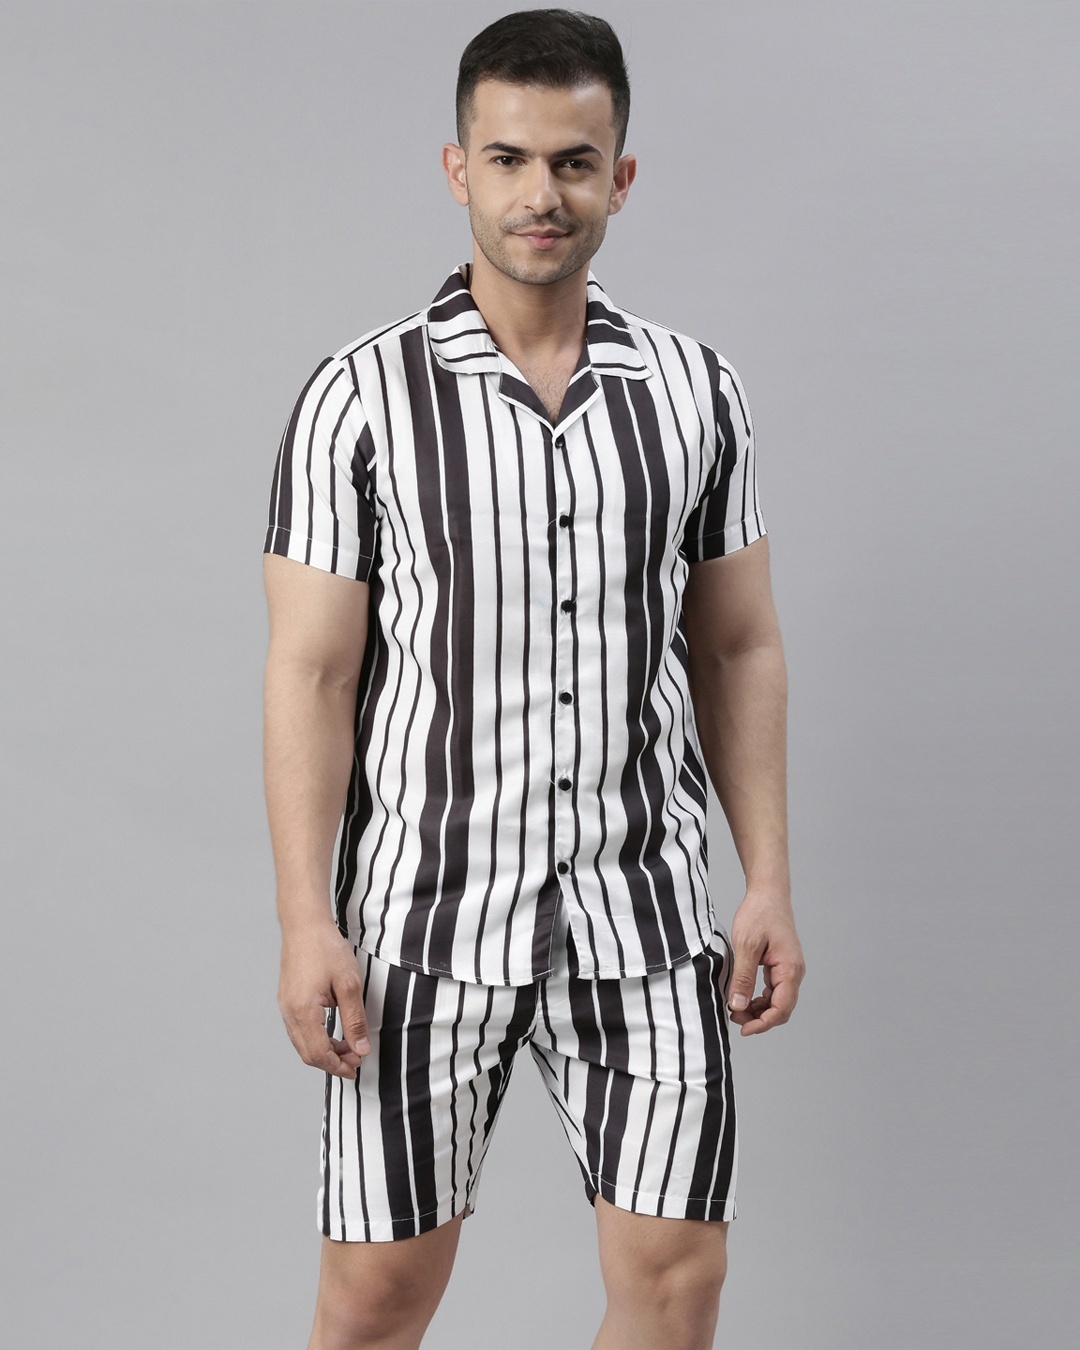 Buy Men's White & Black Striped Co-ord Set Online in India at Bewakoof